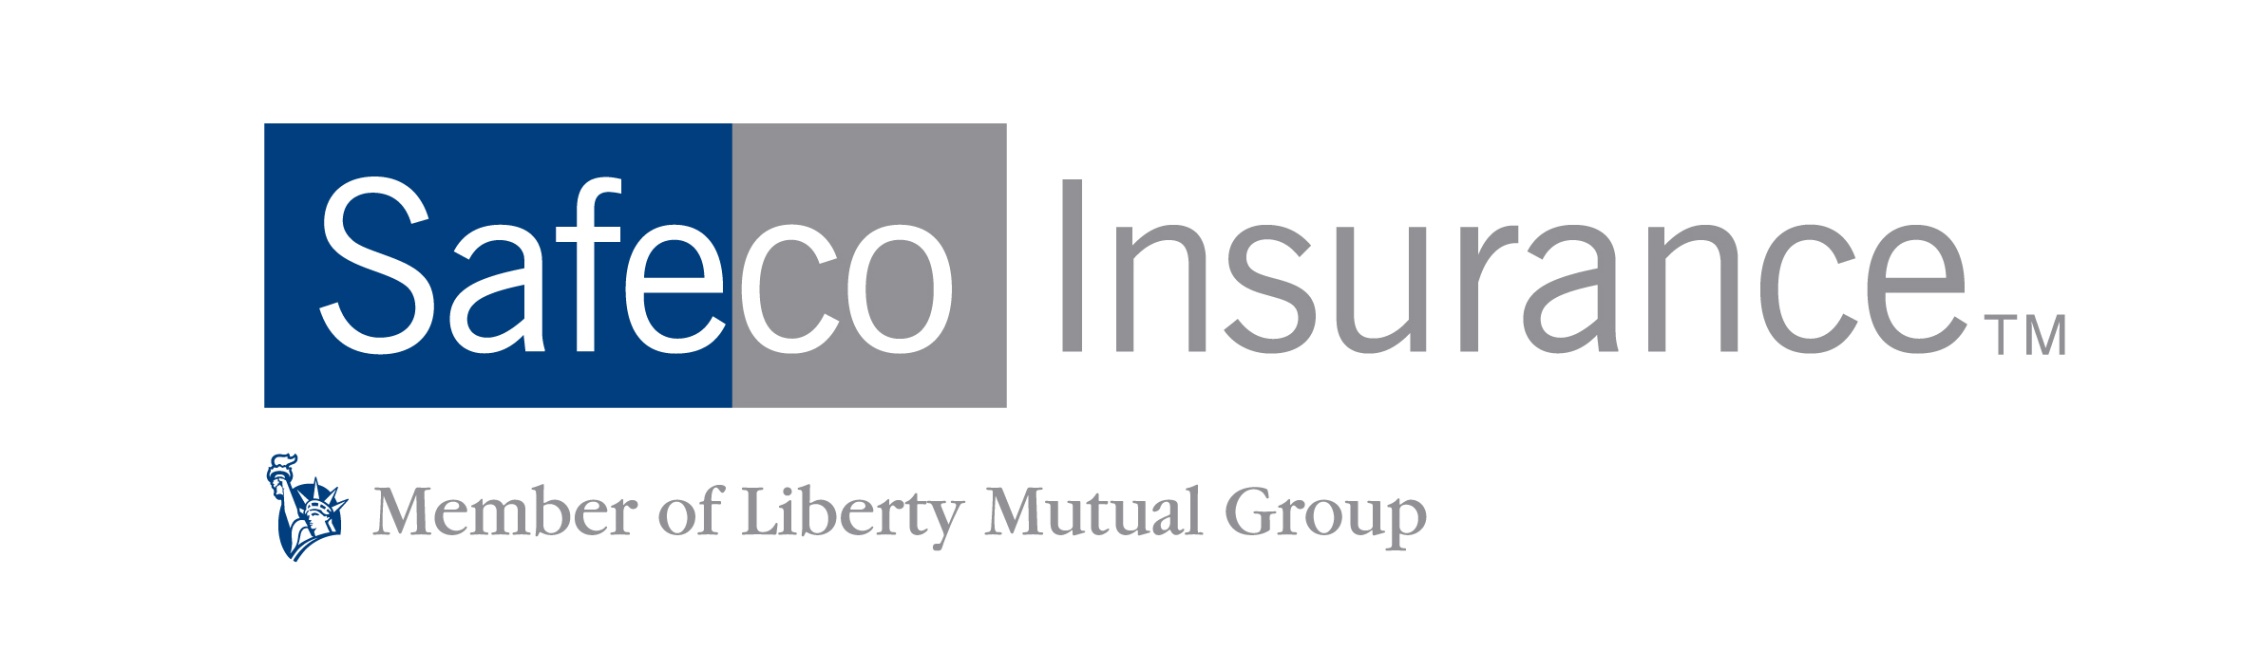 safeco home insurance login Niche Utama Home Safeco Insurance, Things to Know - Midwest Insurance Brokerage